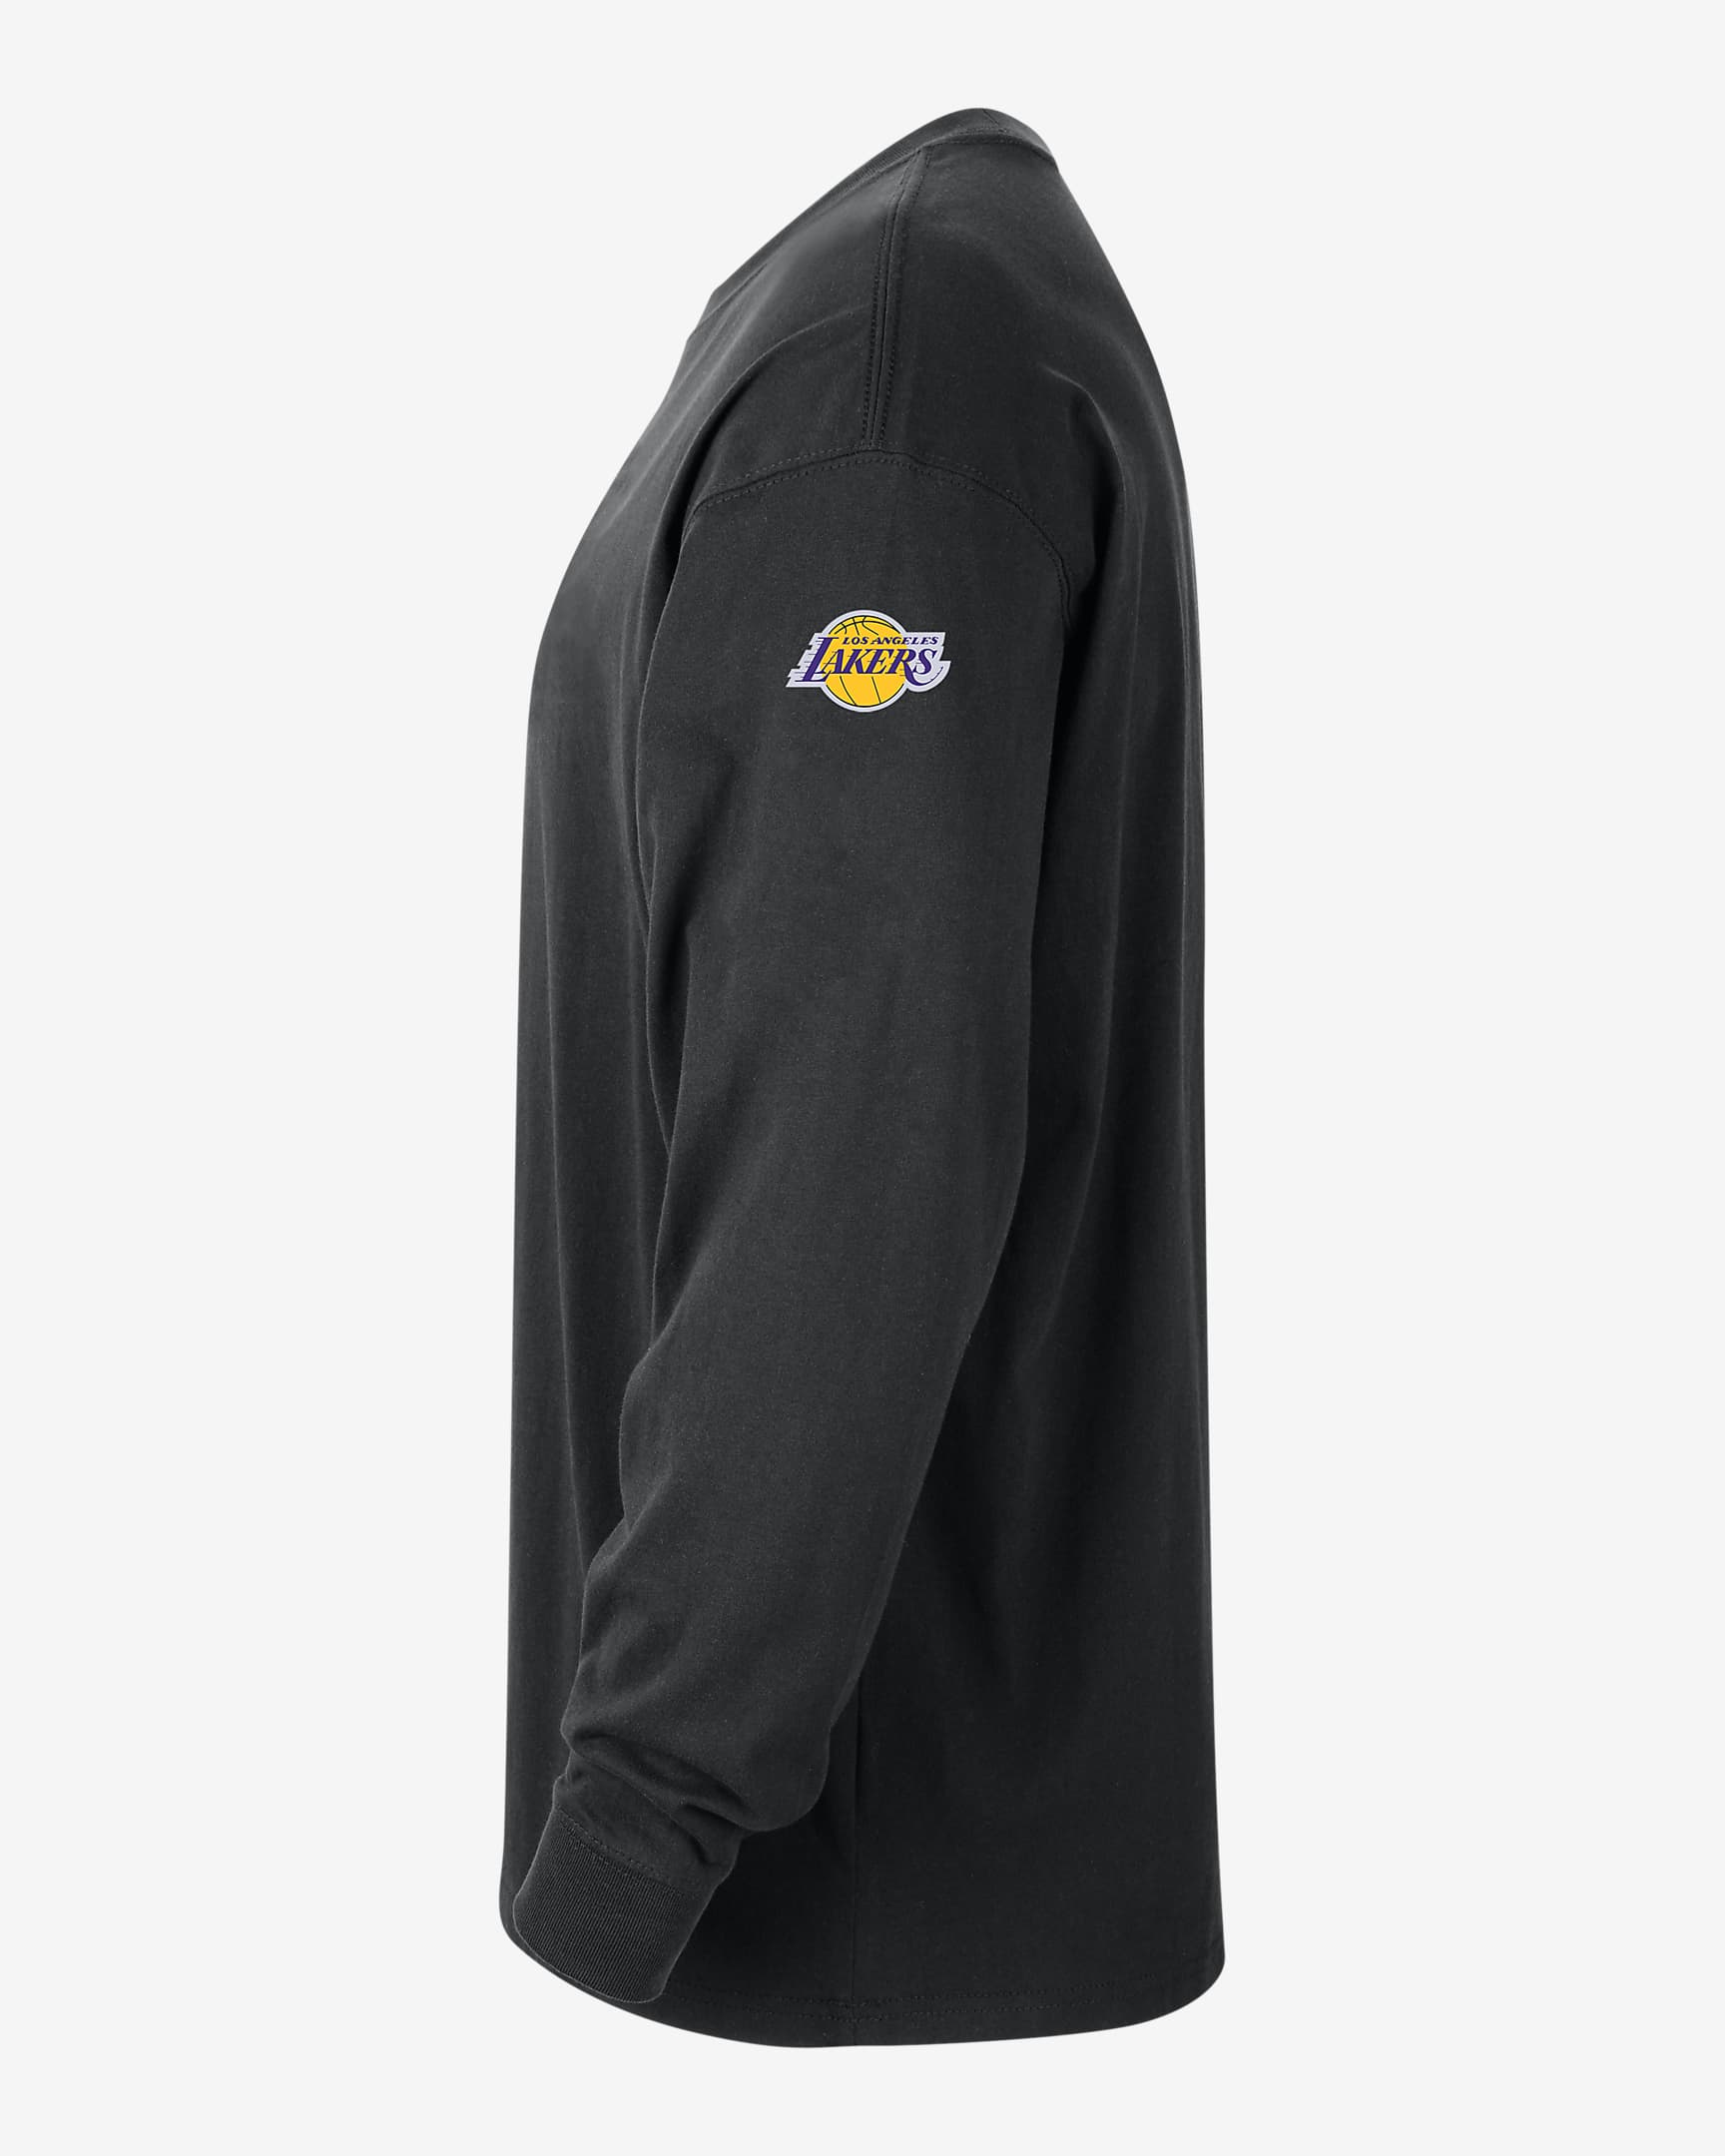 Los Angeles Lakers Men's Nike NBA Long-Sleeve Max90 T-Shirt. Nike.com